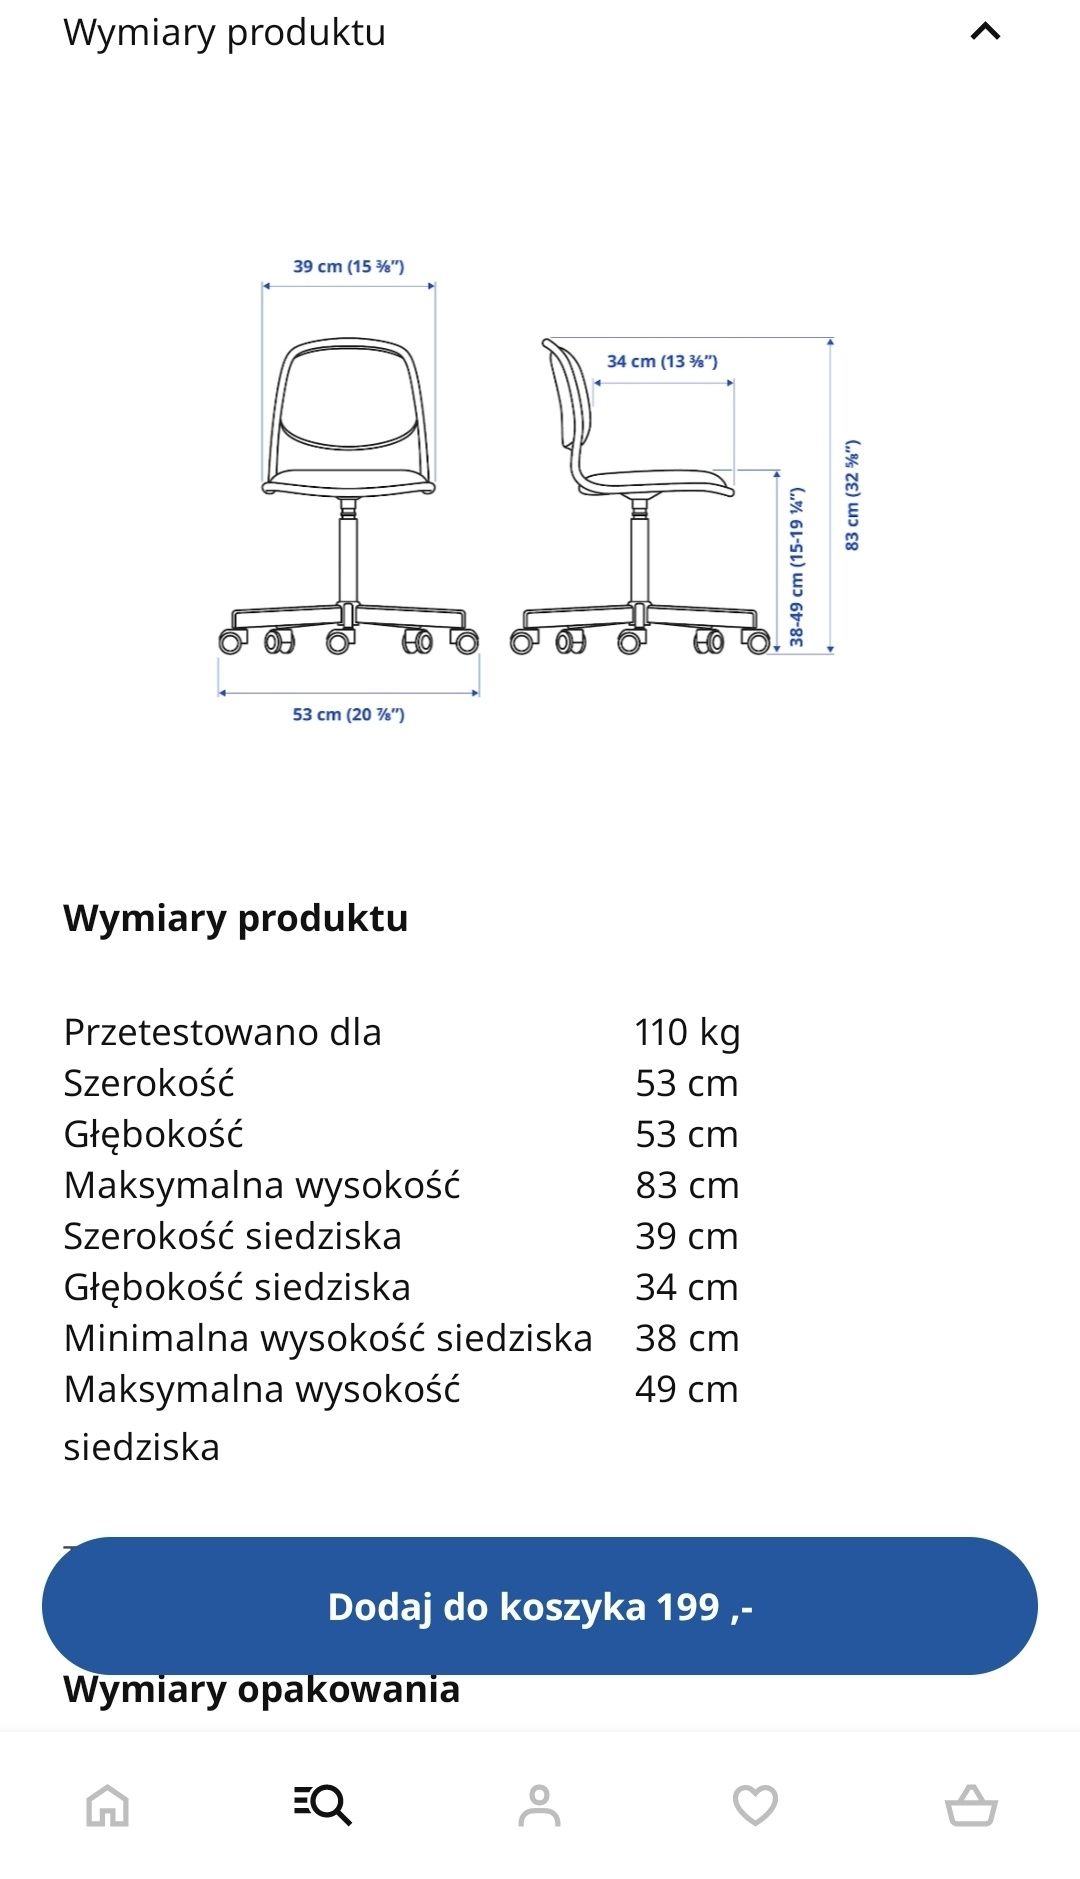 Obrotowe krzesło biurkowe IKEA ÖRFJÄLL